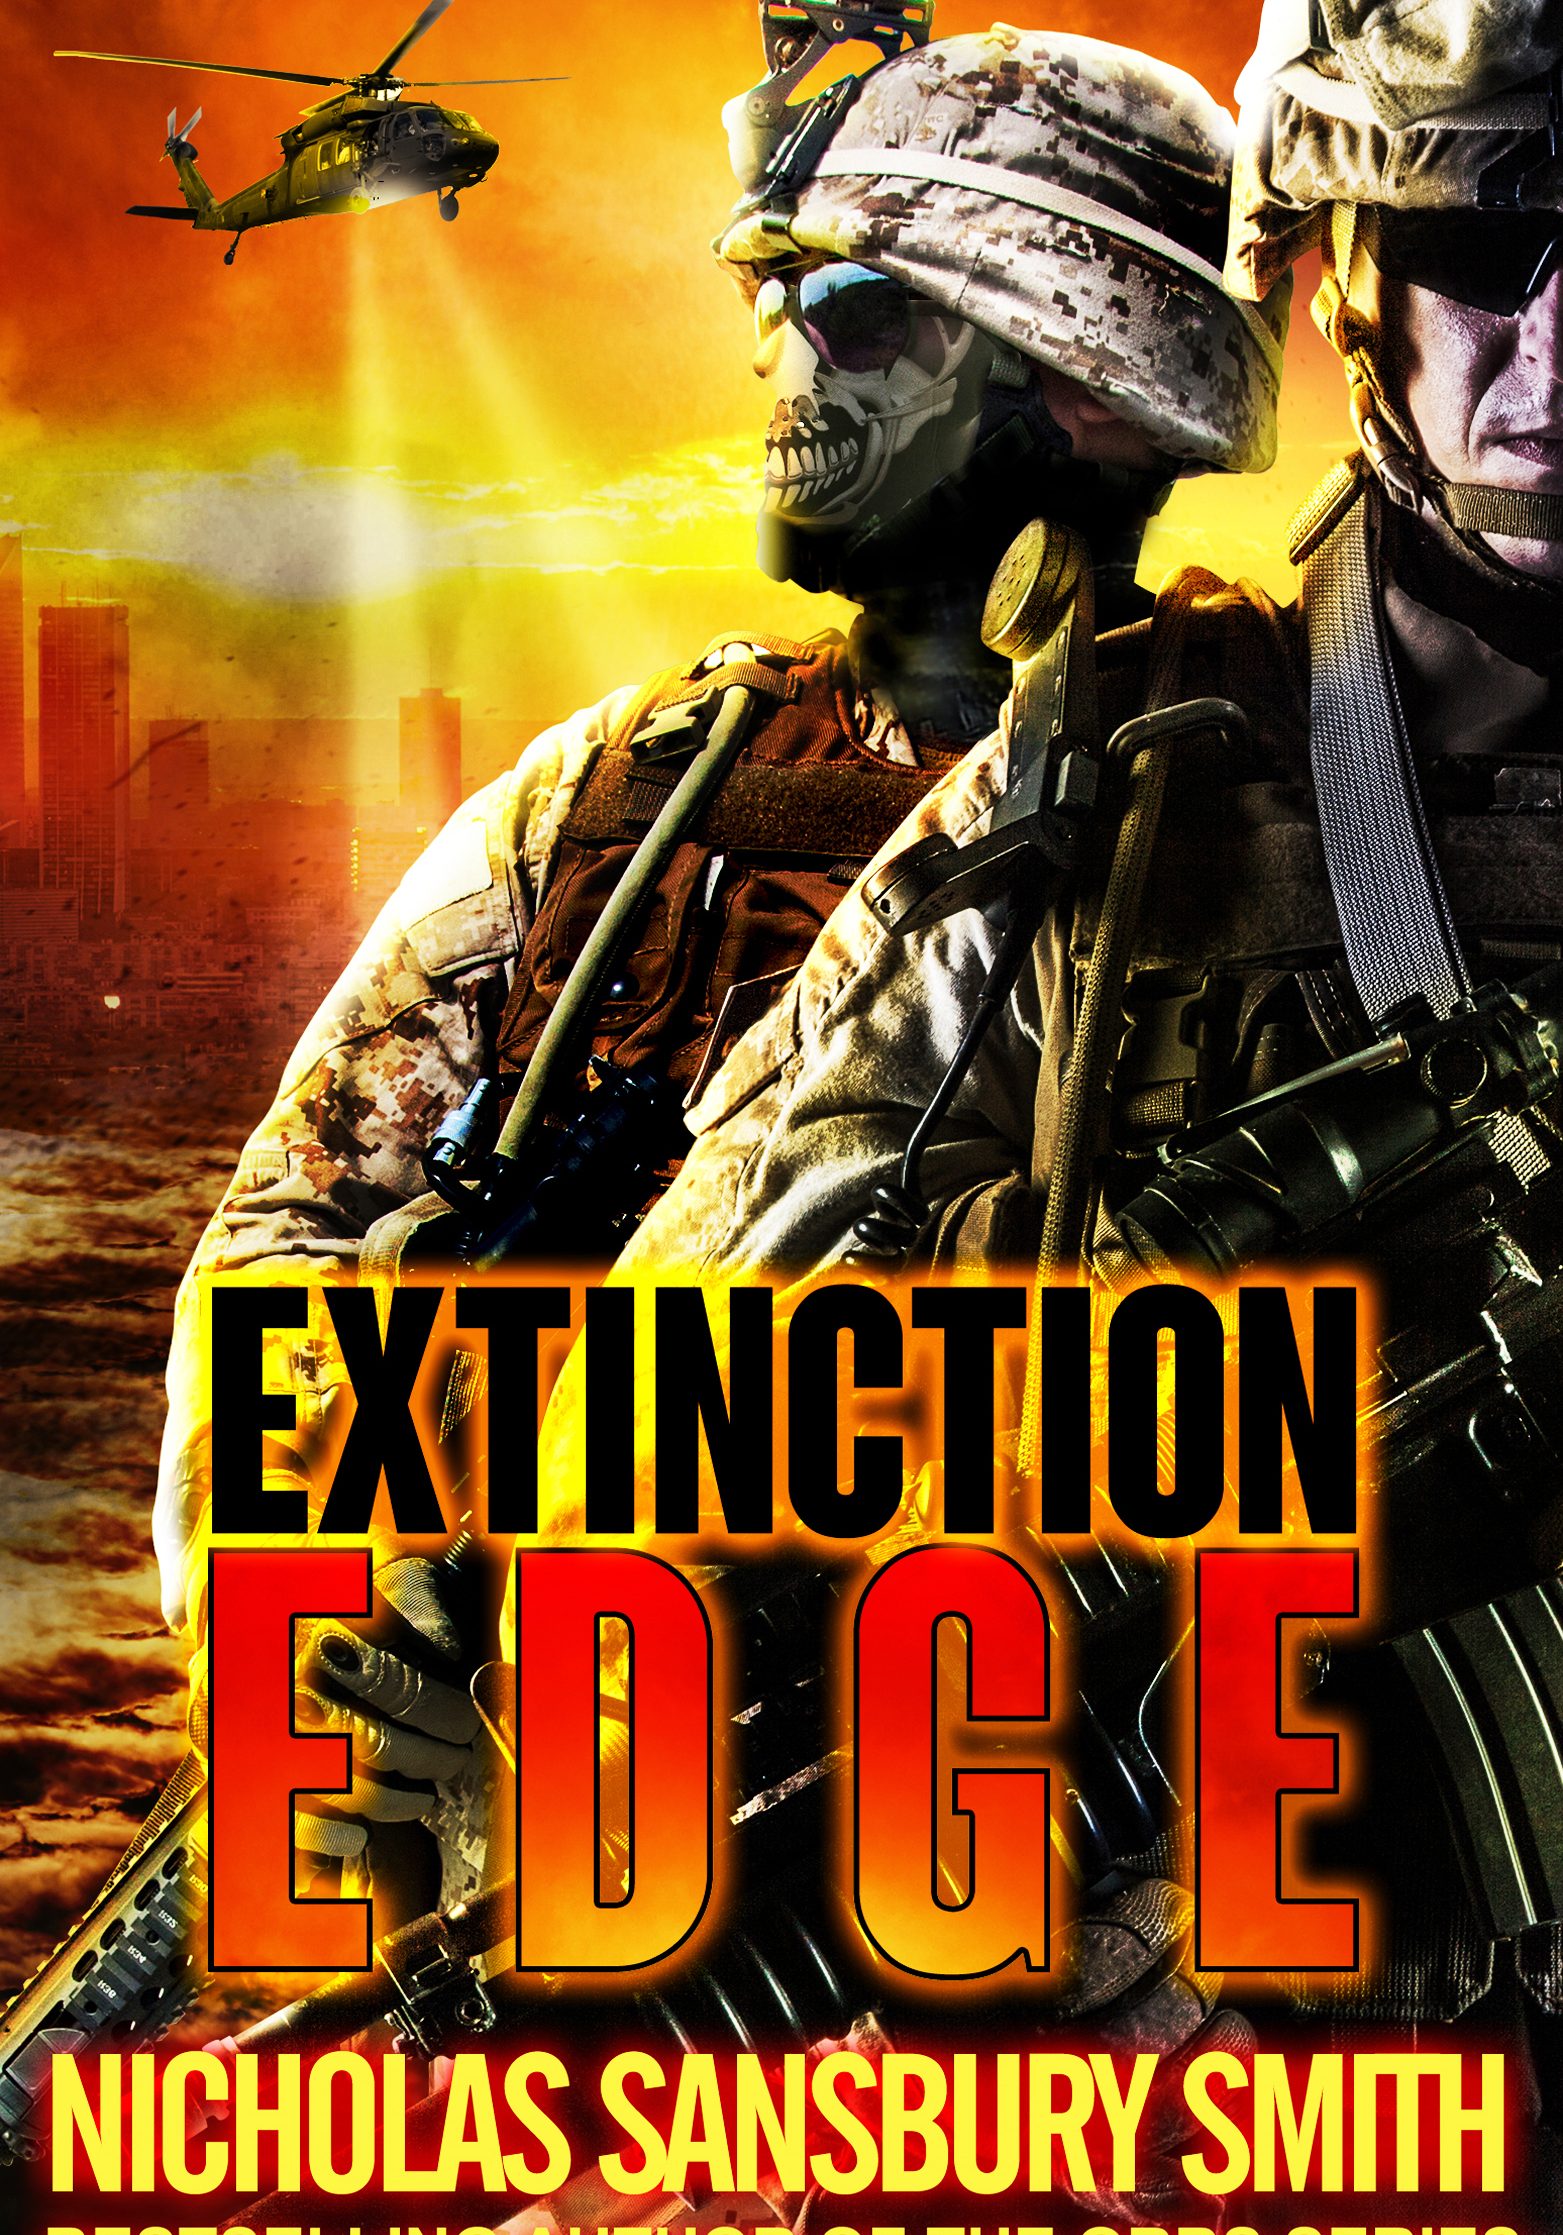 Extinction Edge book trailer loewenherz creative